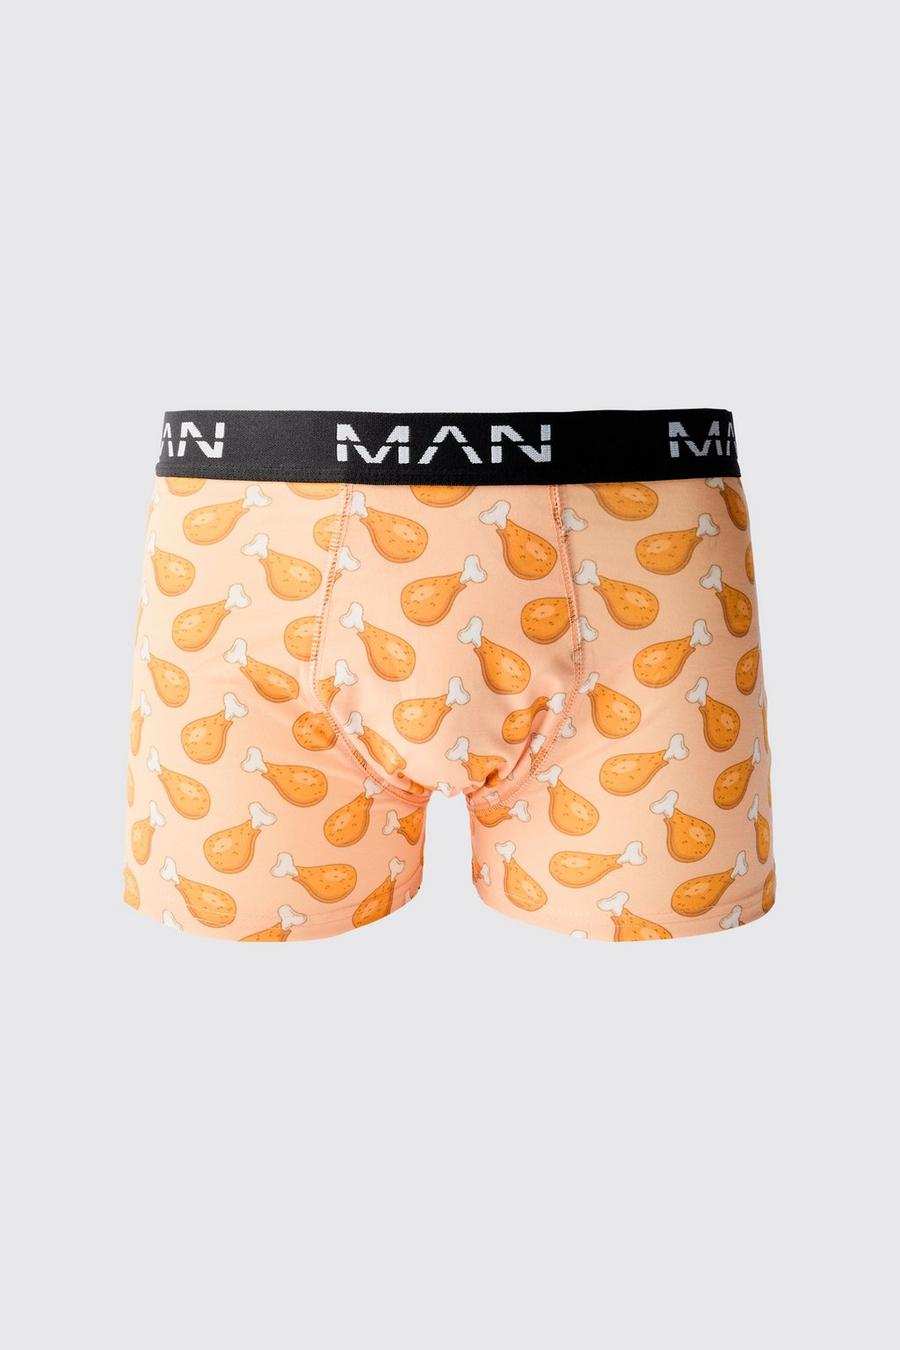 Multi Man Chicken Leg Printed Boxers